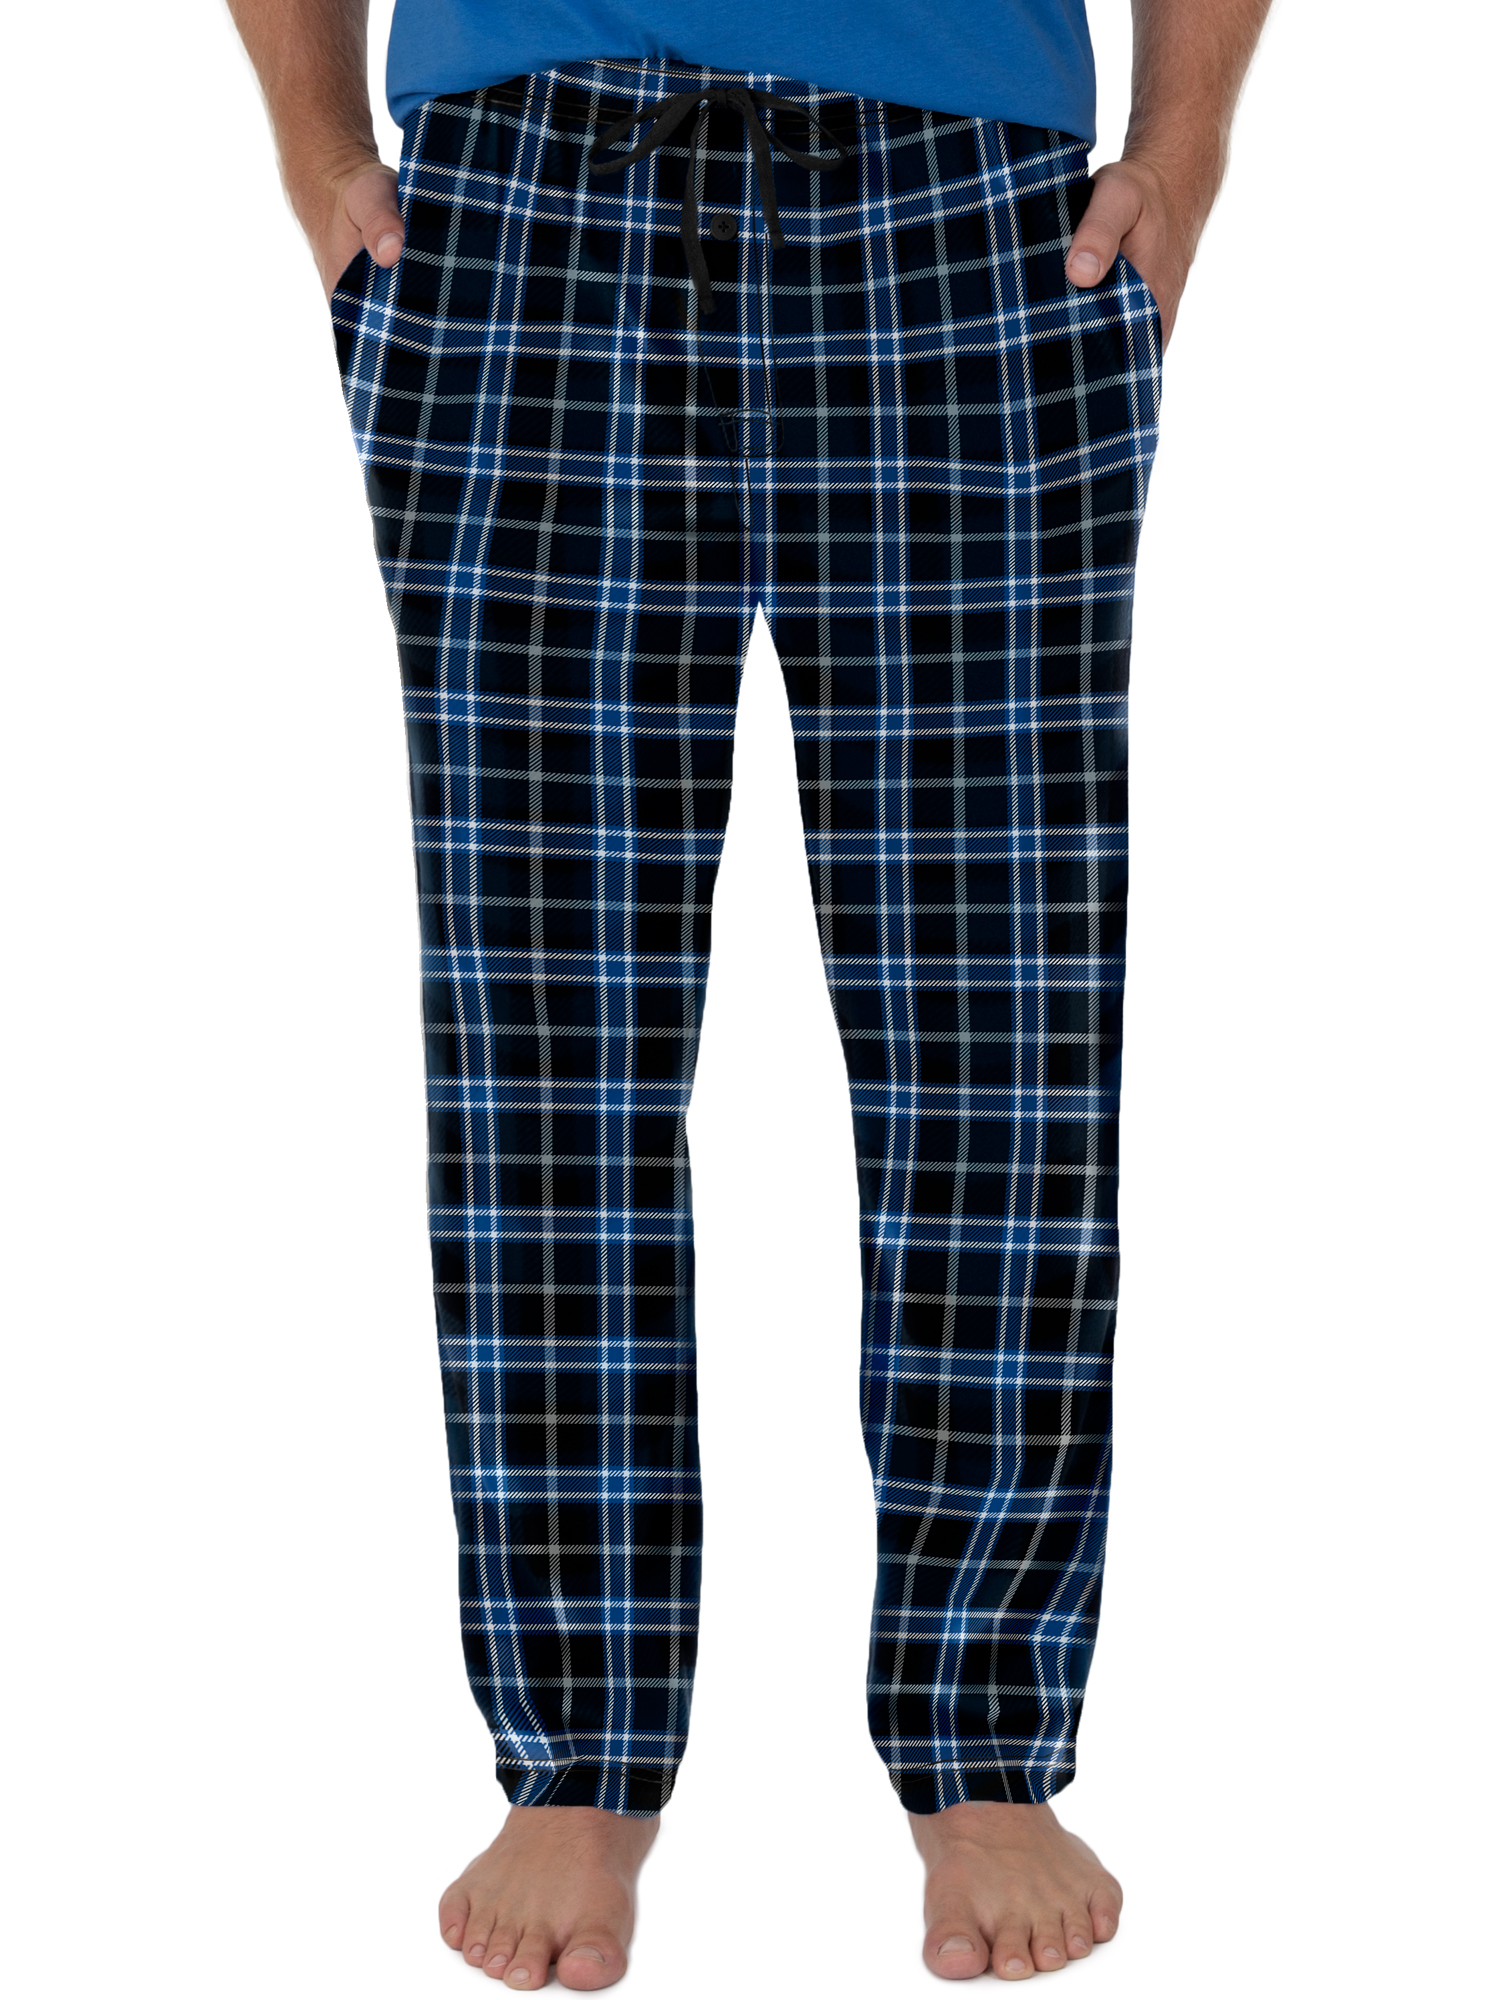 Fruit Of The Loom Men's Short Sleeve Crew Neck Top and Fleece Pajama Pant Set - image 4 of 5